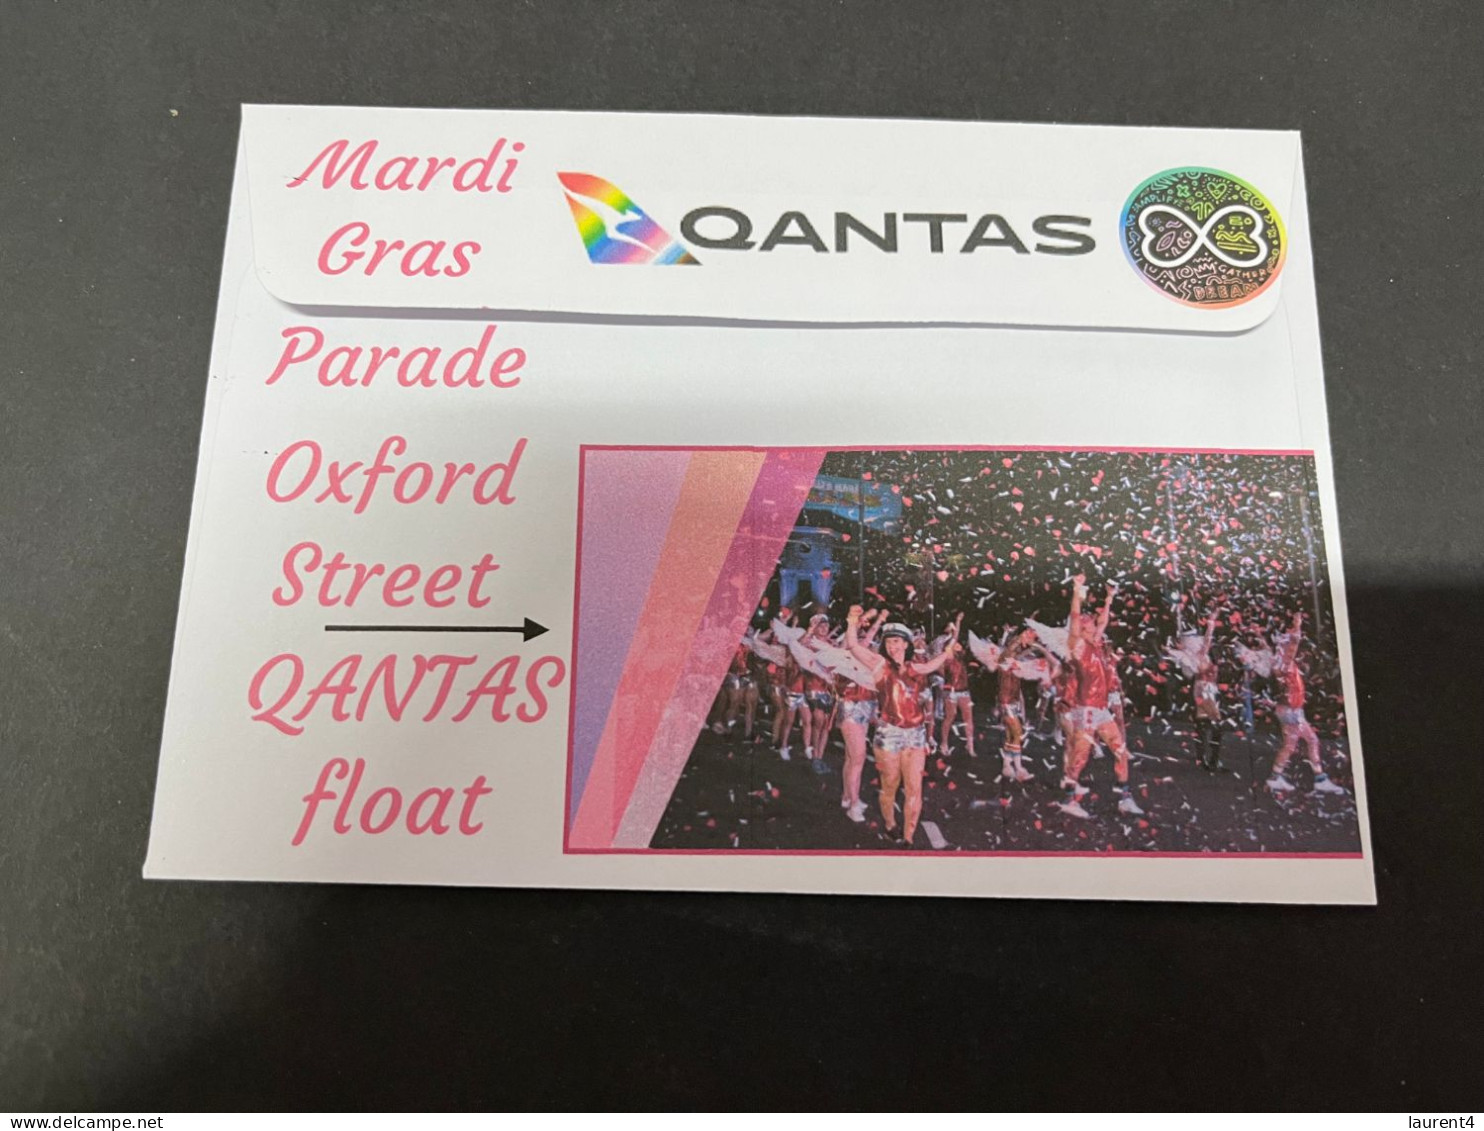 26-9-2023 (2 U 12) Sydney World Pride 2023 - QANTAS Rainbow Aircraft Tail (QANTAS To Norfolk) 25-2-2023 - Brieven En Documenten